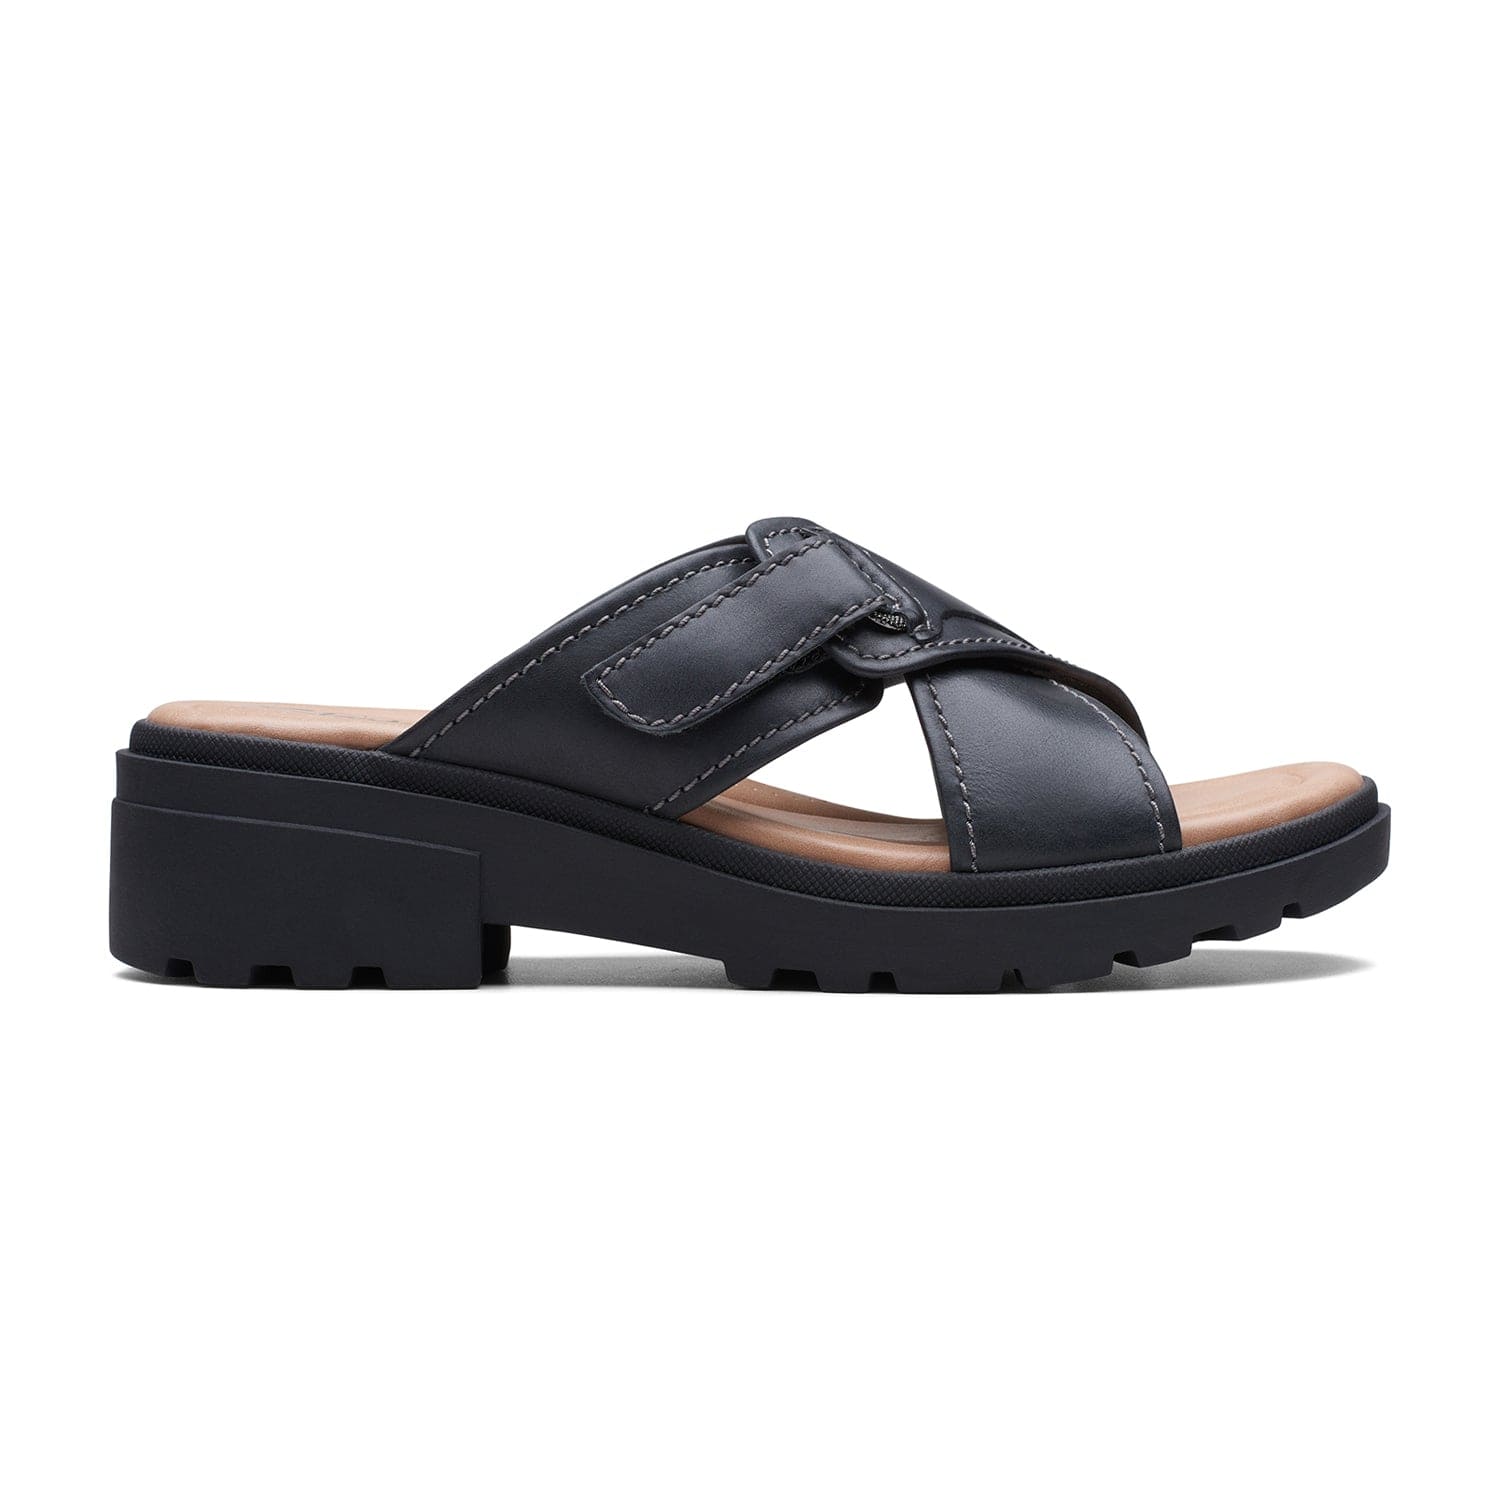 Clarks Coast Cross Sandals - Black Leather - 261717325 - E Width (Wide Fit)